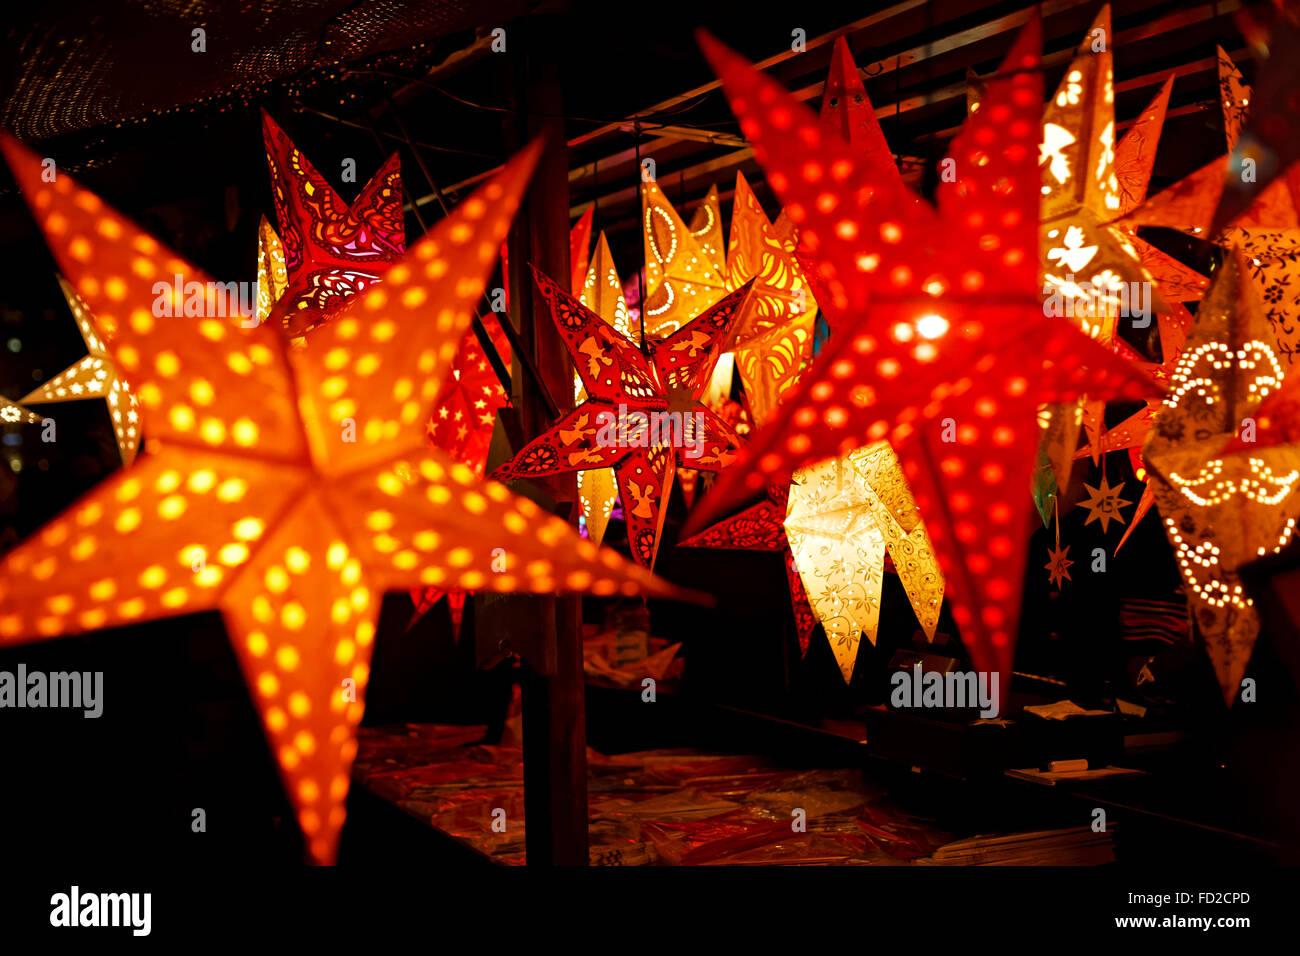 Christmas star light decoration at night, Munich, Germany Stock ...